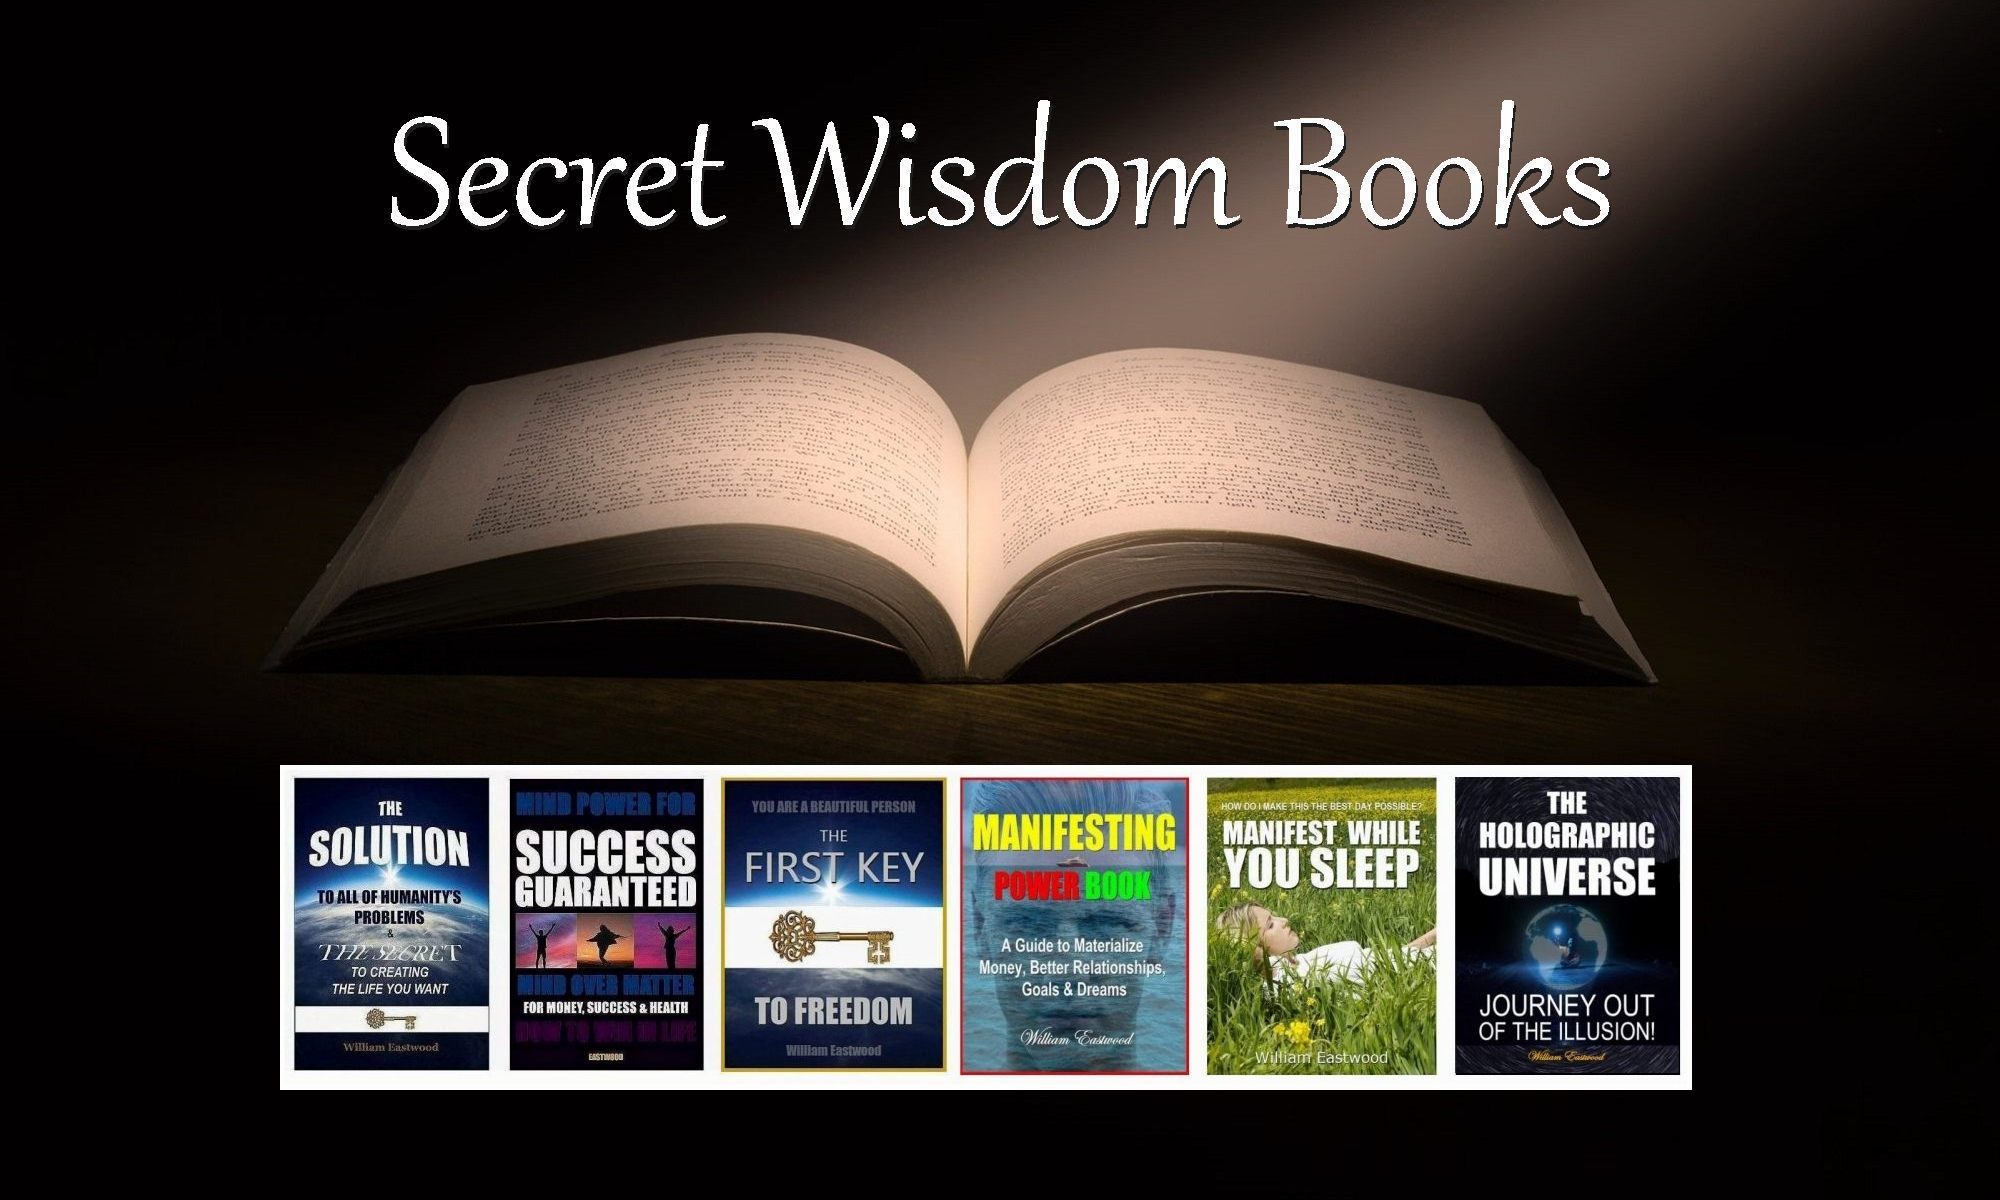 SECRET WISDOM BOOKS: International Philosophy By William Eastwood ebooks pdf